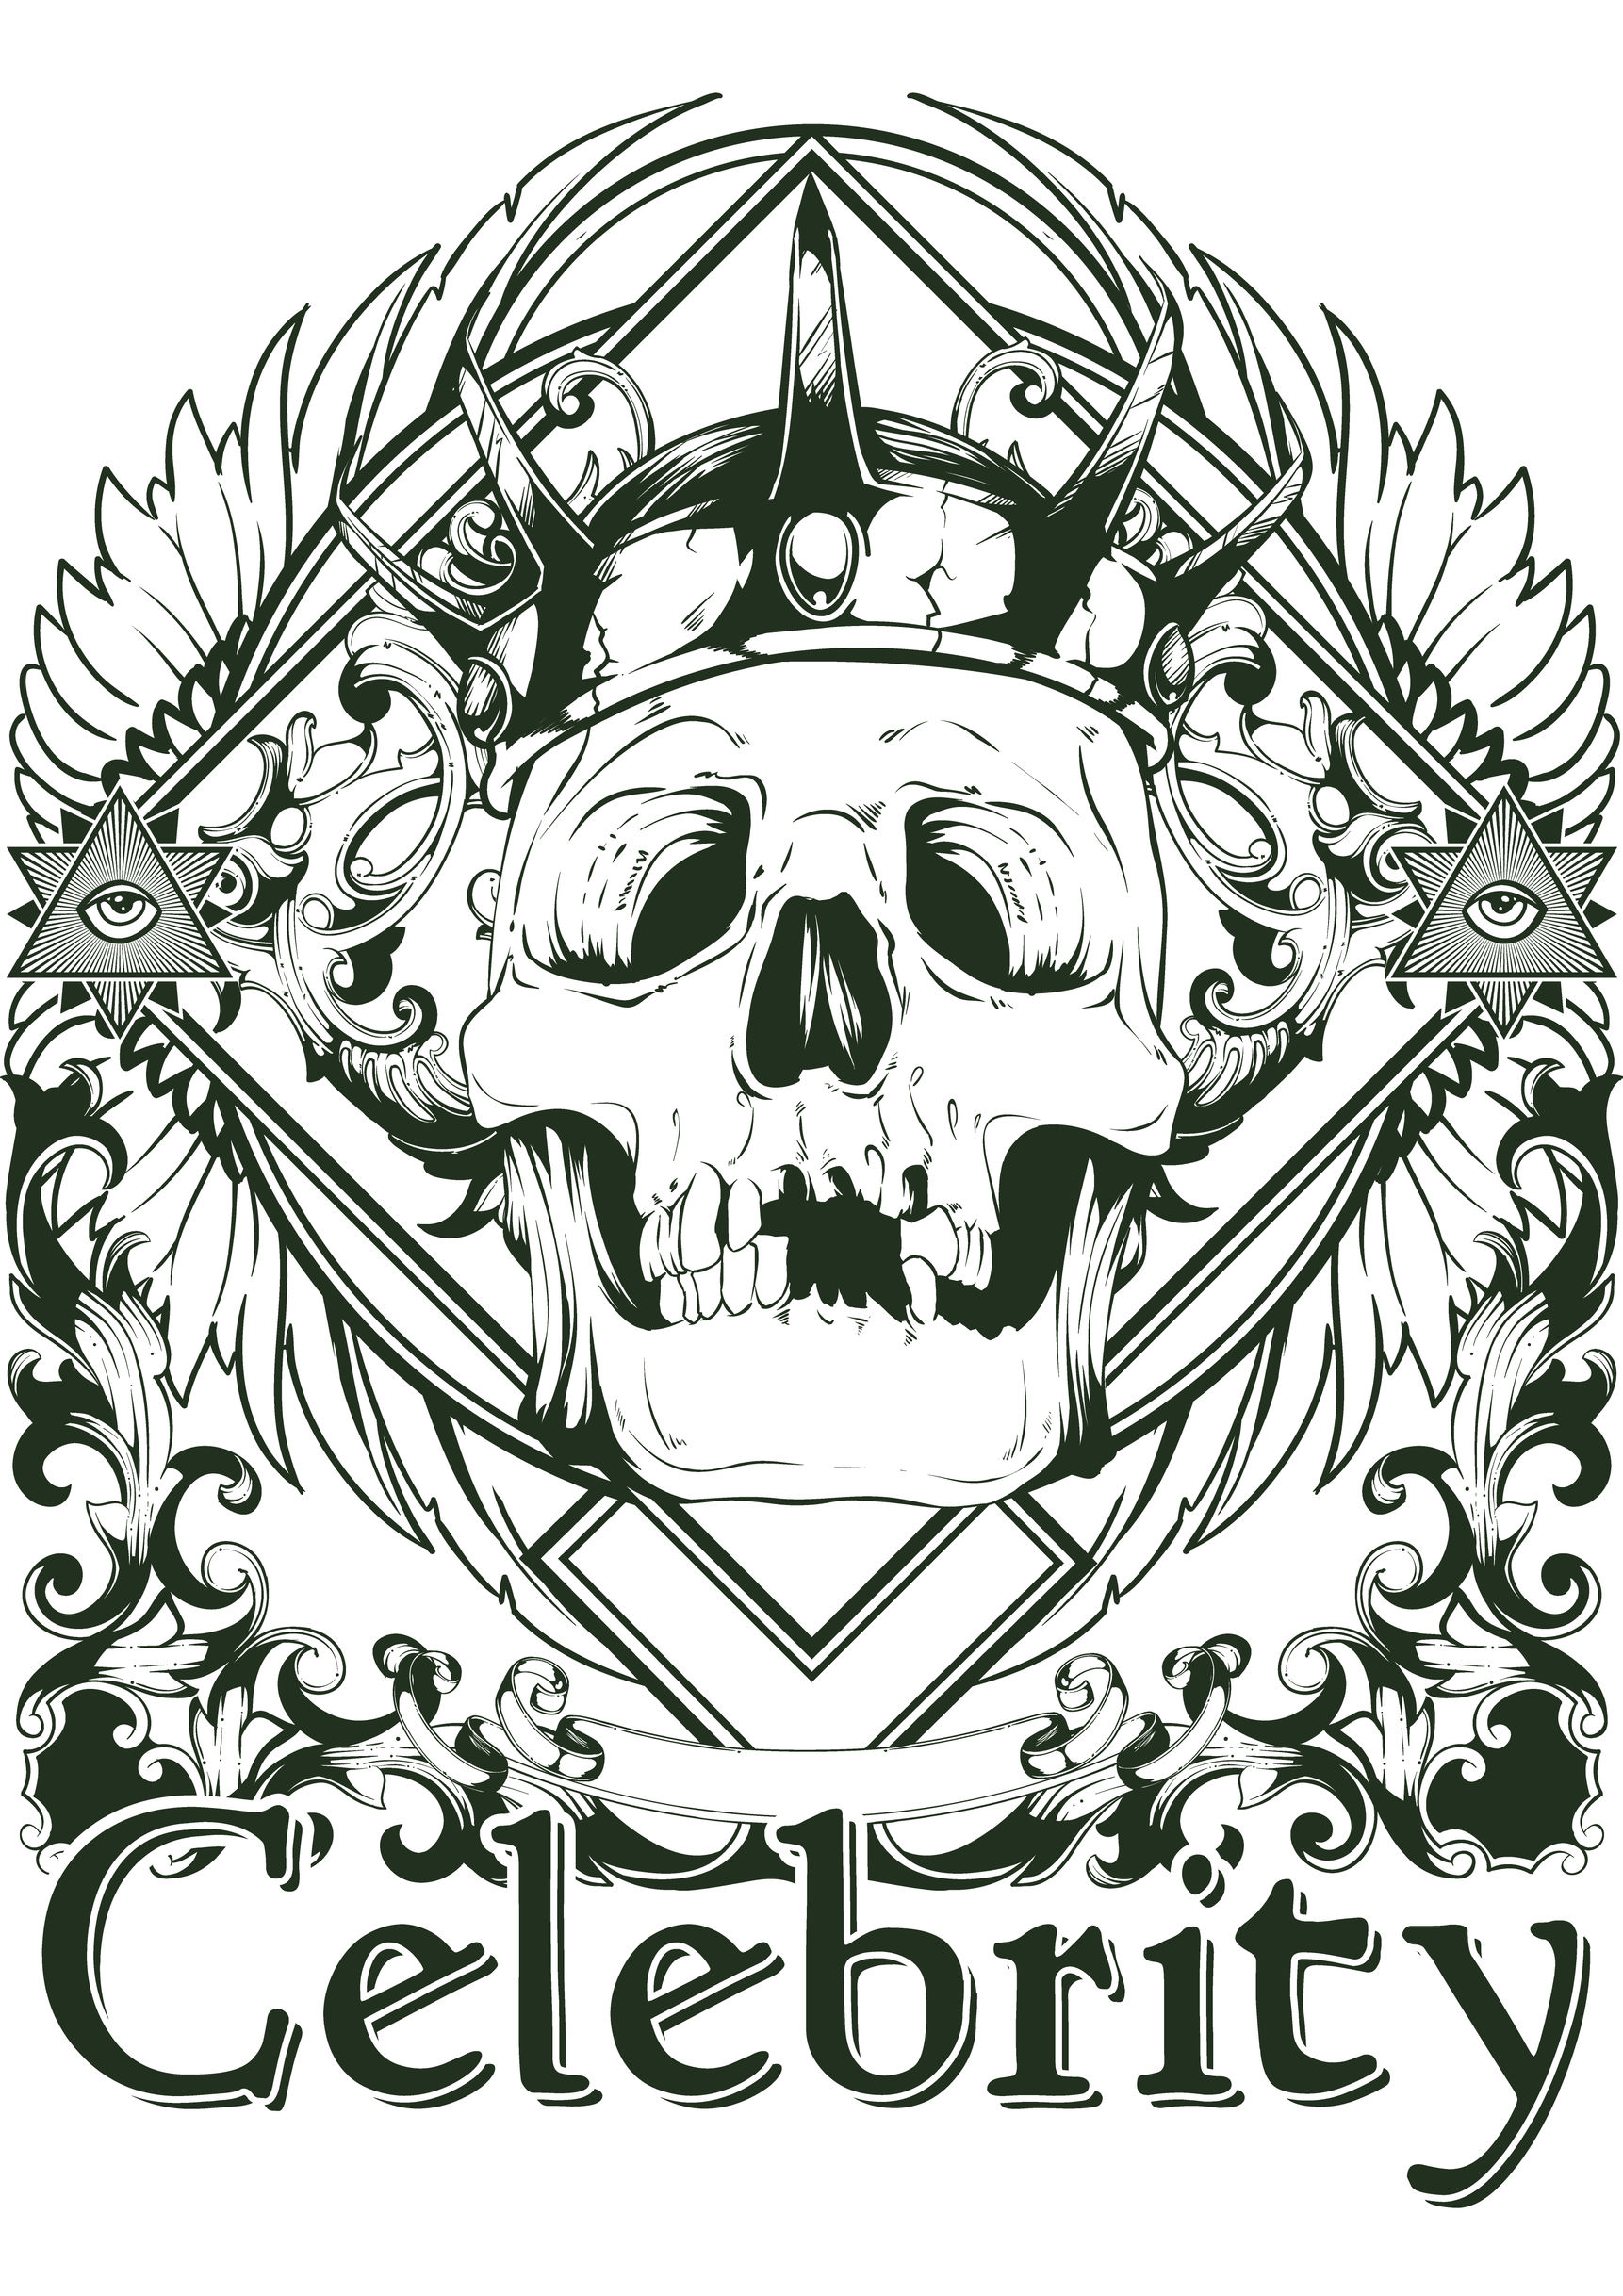 Tattoo skeleton celebrity - Image with : Skull, Celebration, Death